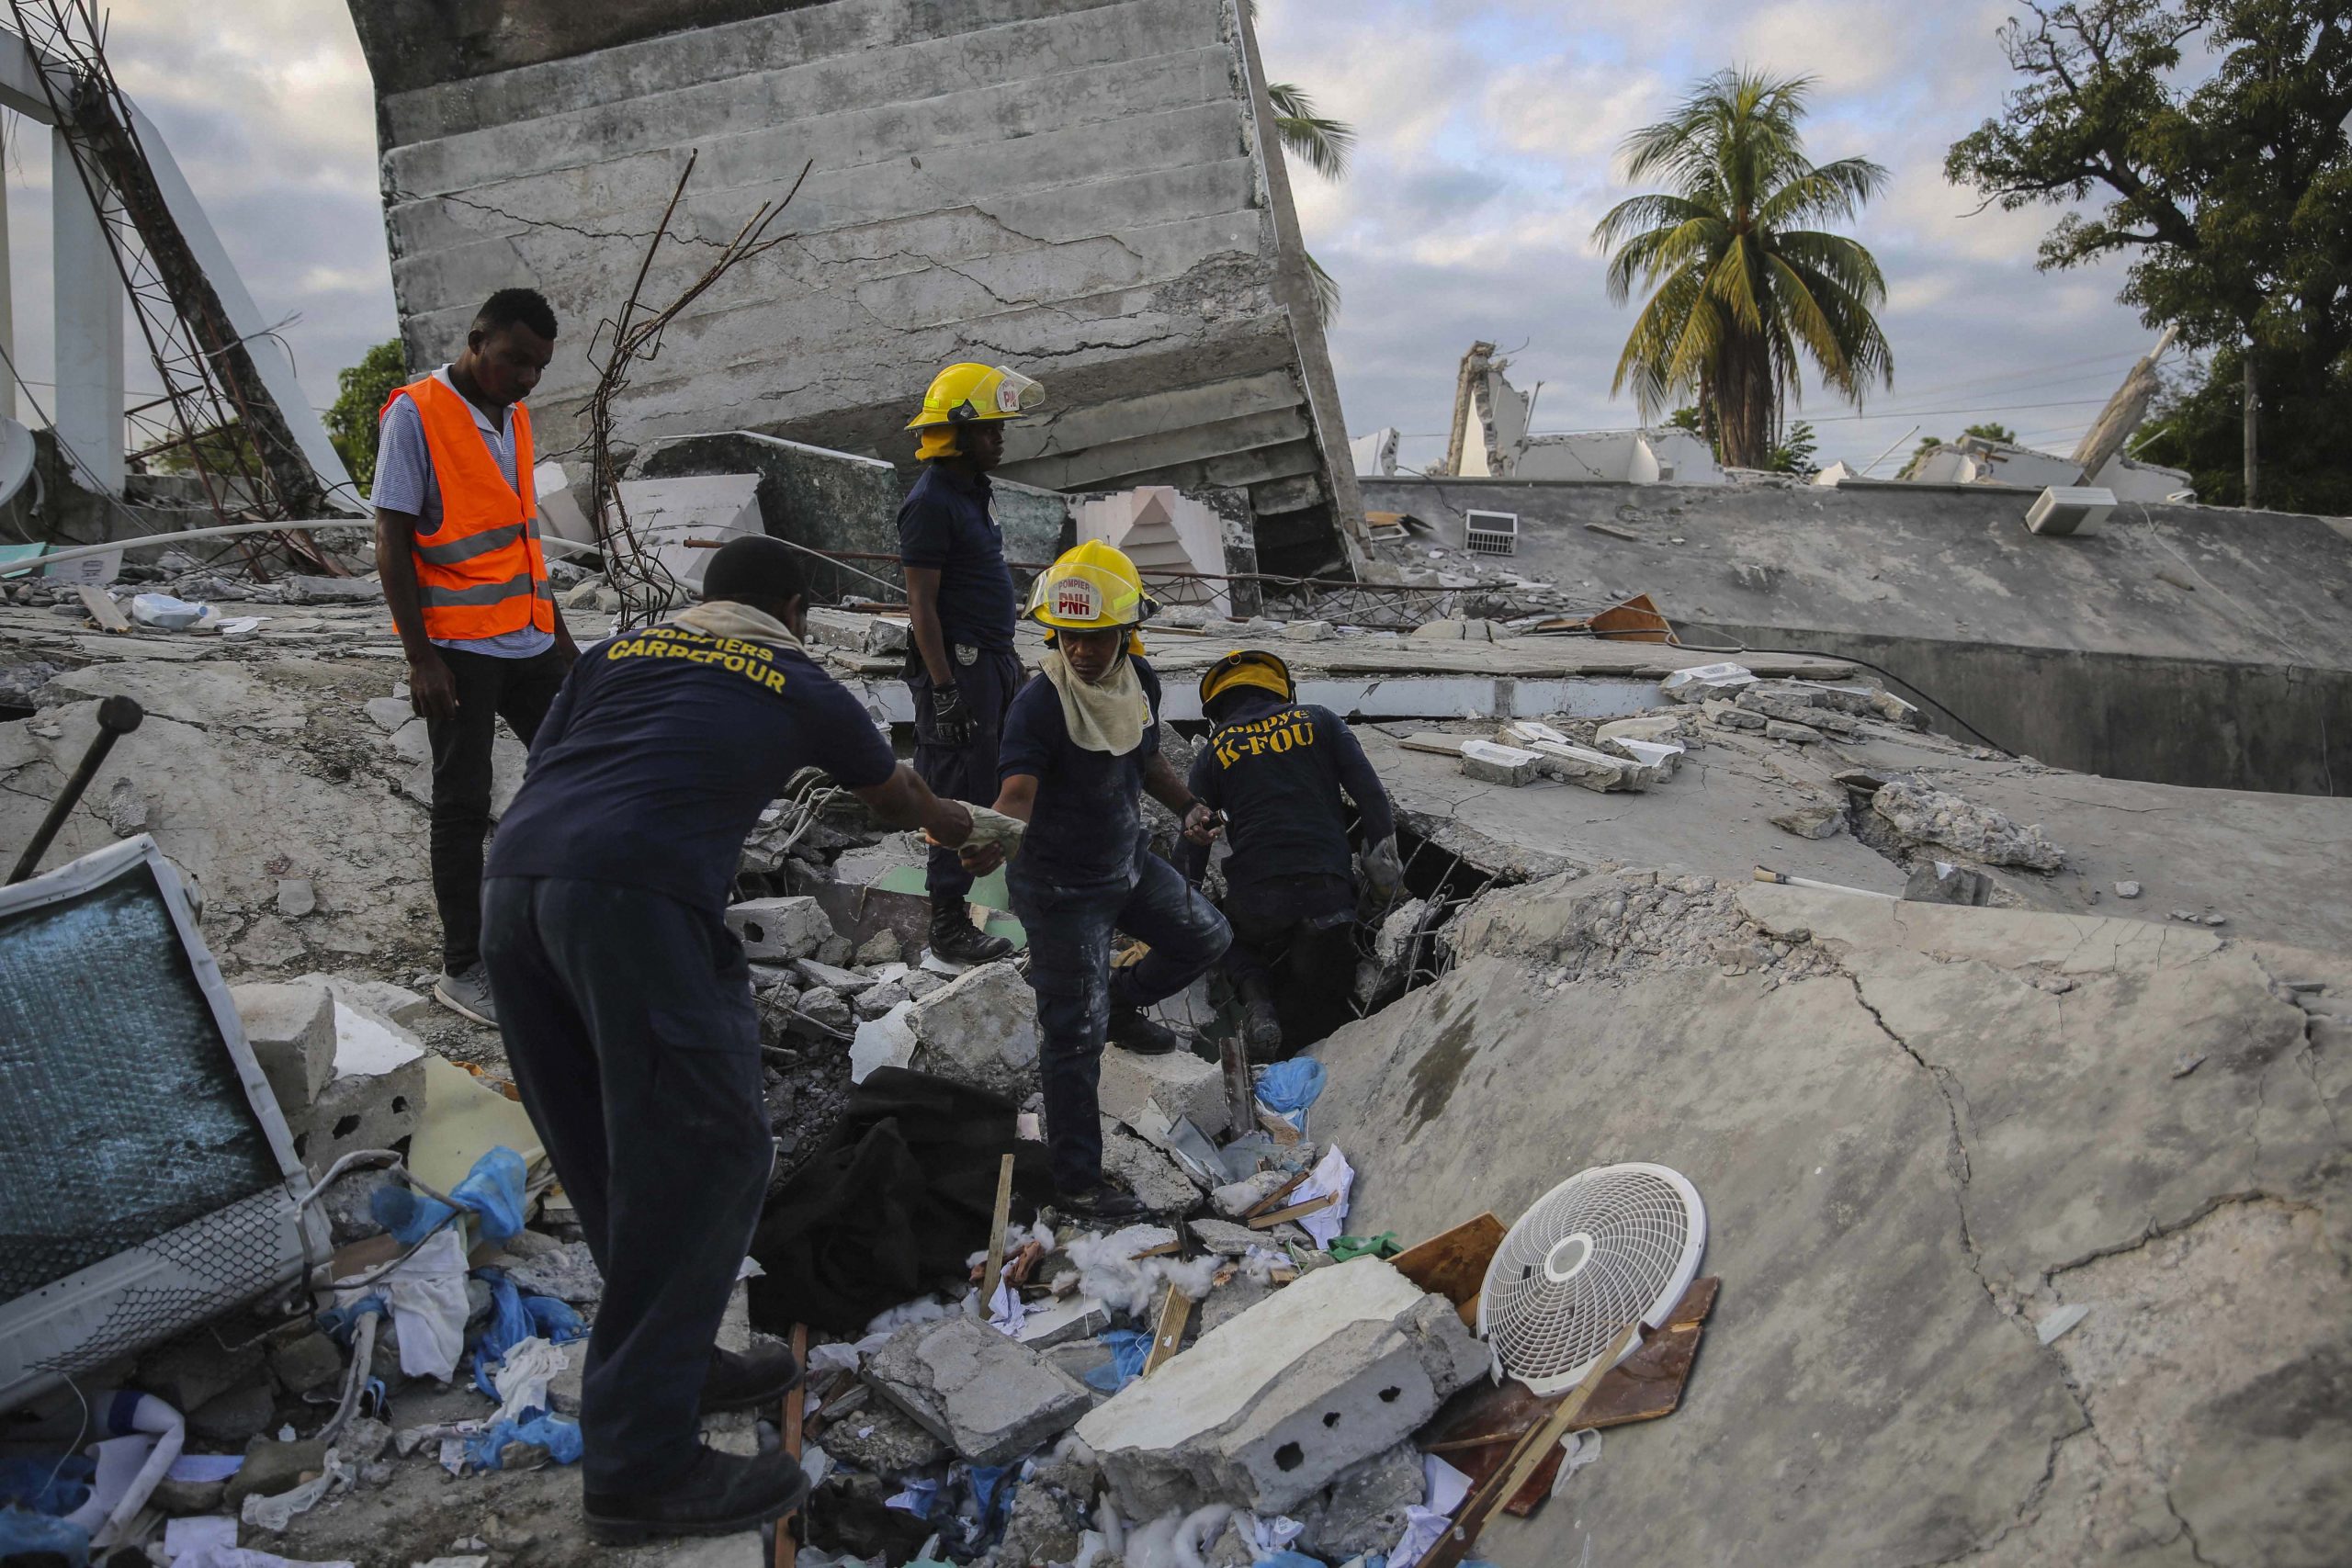 Why are earthquakes so devastating in Haiti?